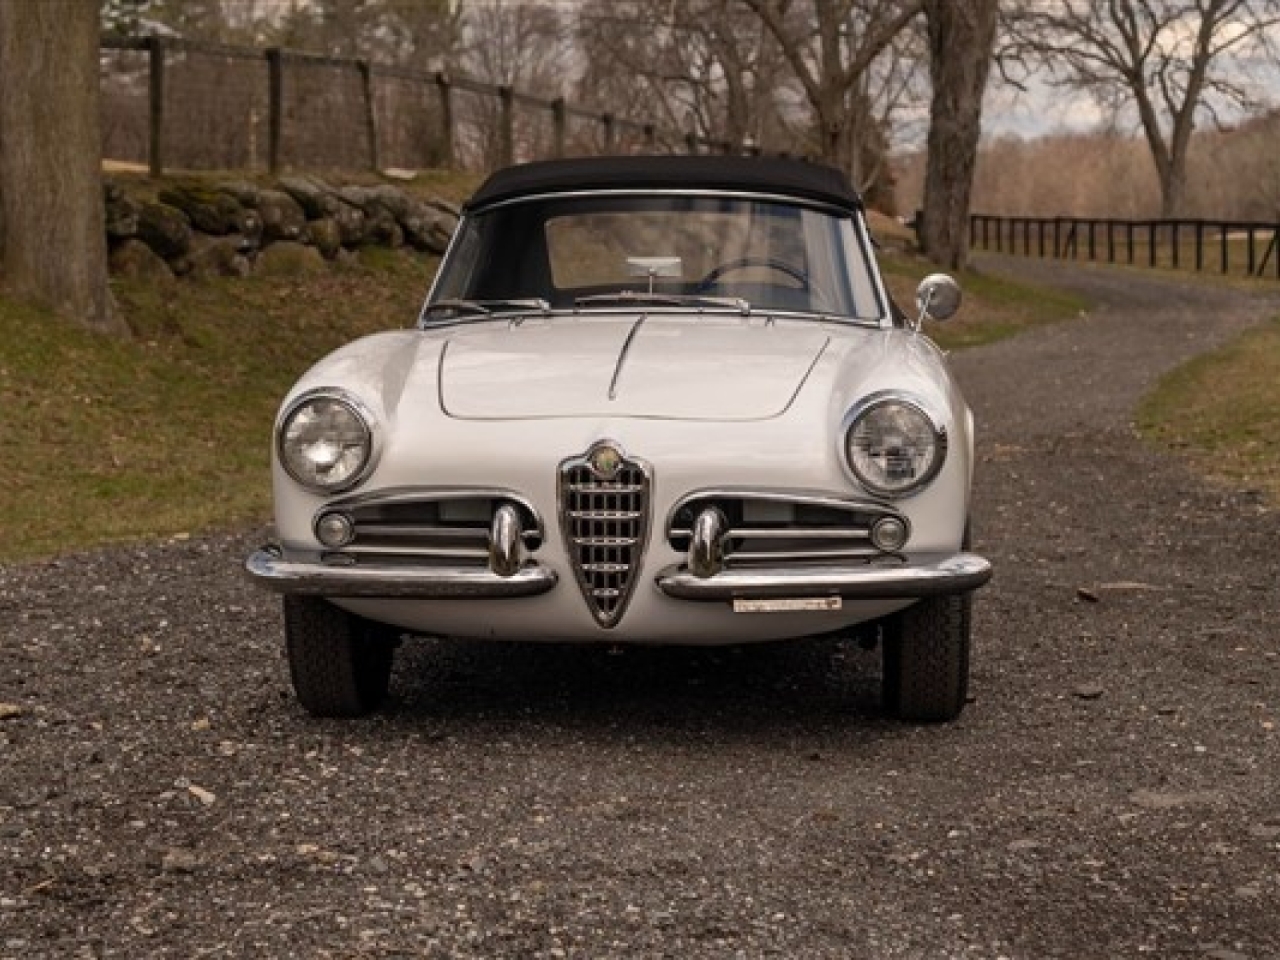 1959 Alfa Romeo 1300 Giulietta Spider